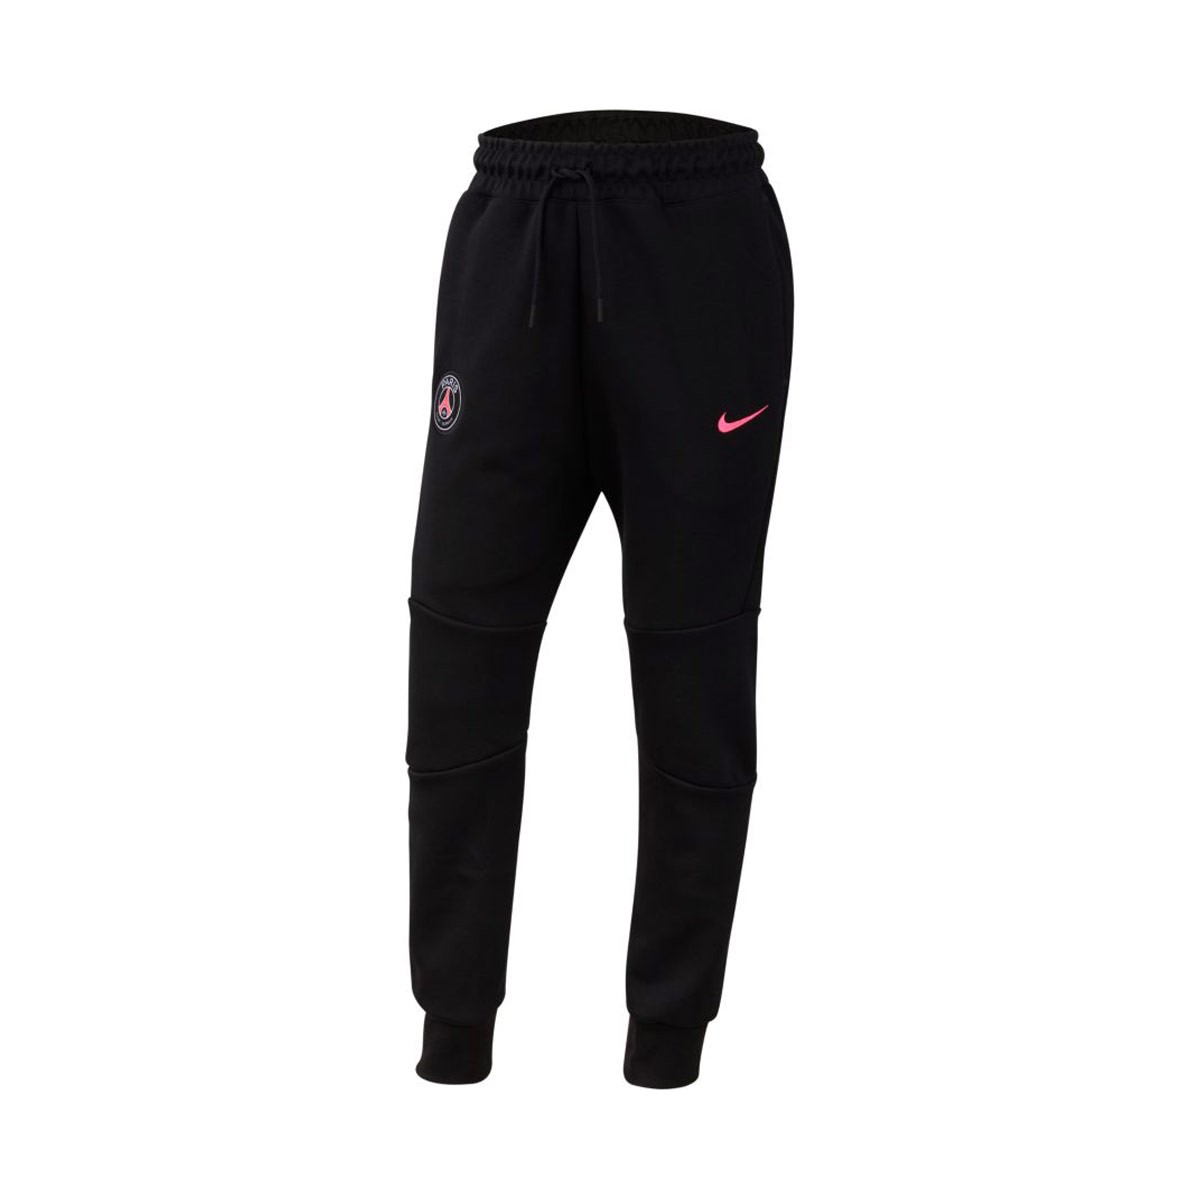 Pantaloni lunghi Nike Paris Saint-Germain NSW Tech Fleece 2018-2019 Junior  Black-Hyper pink - Negozio di calcio Fútbol Emotion